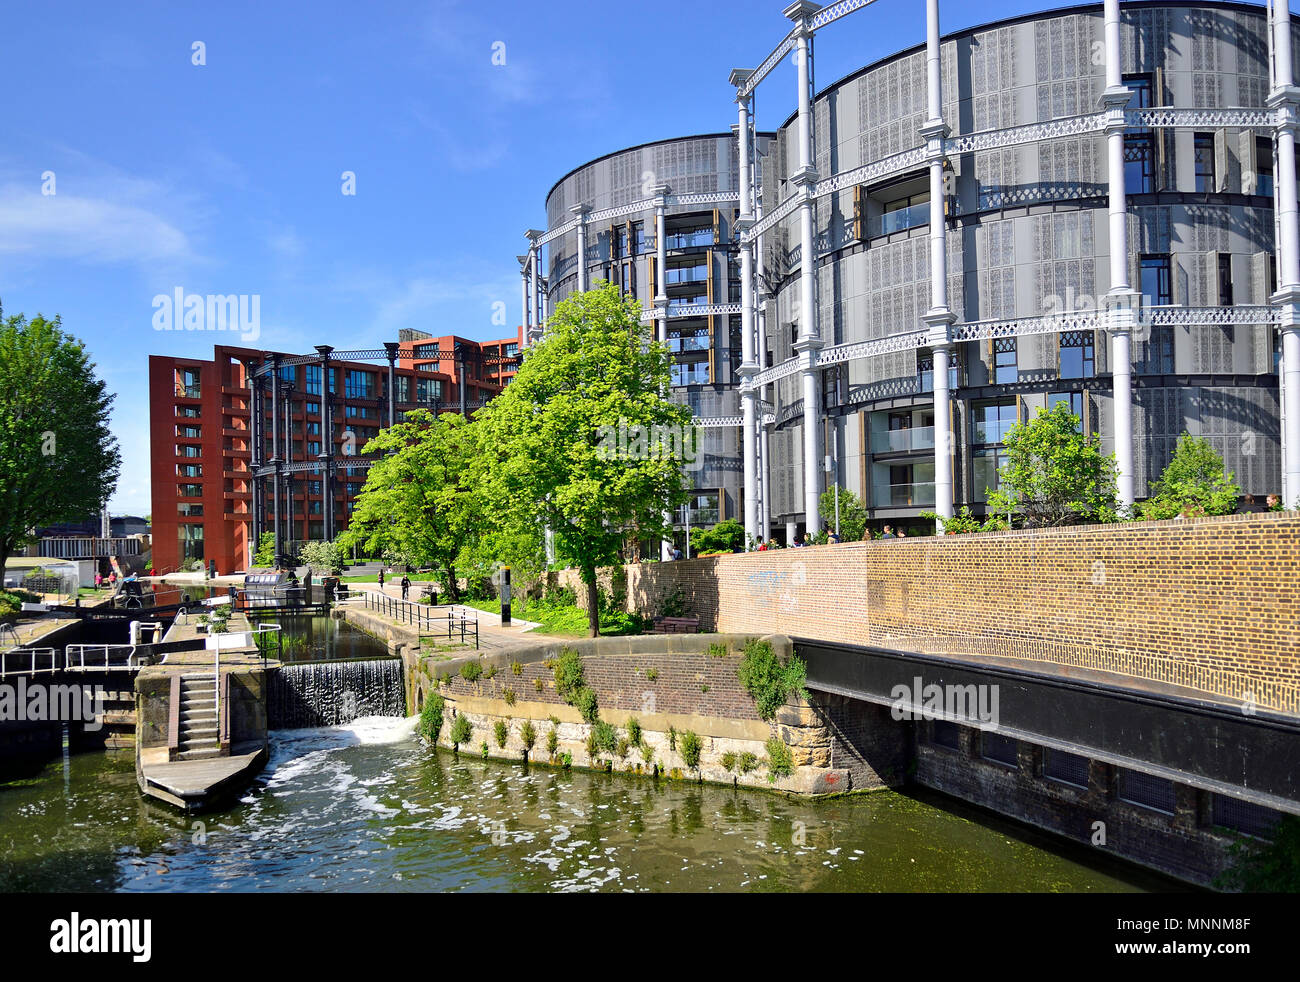 St Pancras Lock and Gasholder Apartments, Lewis Cubitt Square, Kings Cross, London, England, UK. Luxury  flats built in Grade II listed gasholders Stock Photo